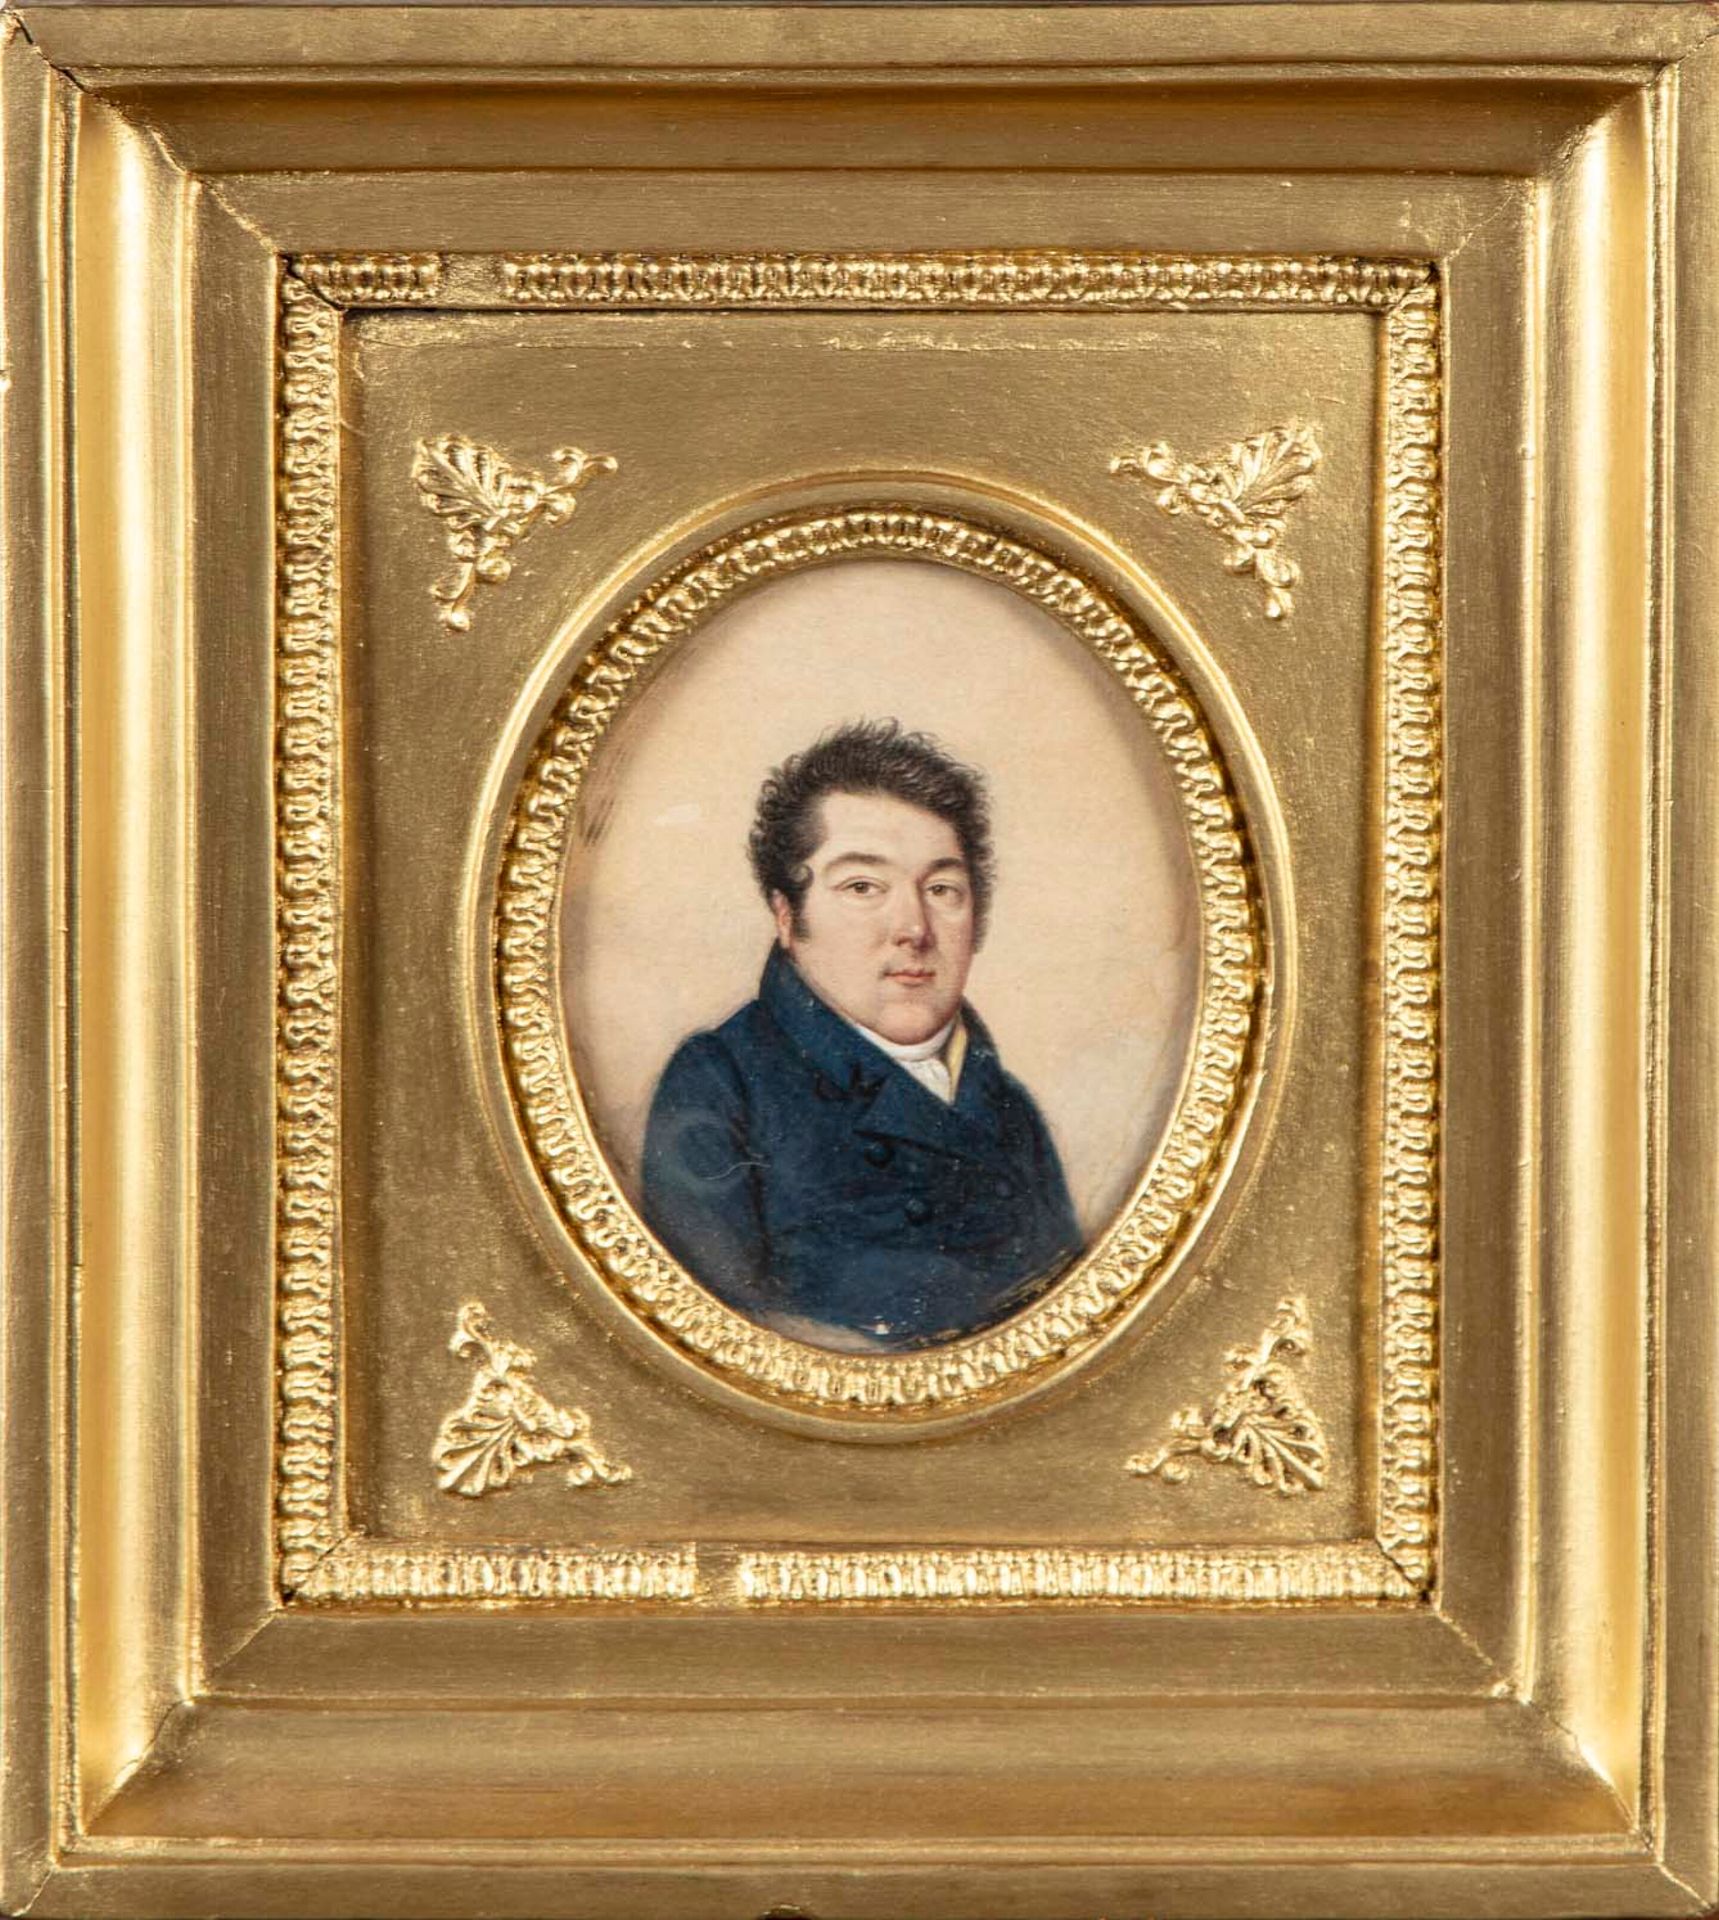 ECOLE FRANCAISE XIXè FRANZÖSISCHE SCHULE des 19. Jahrhunderts

Porträt eines Man&hellip;